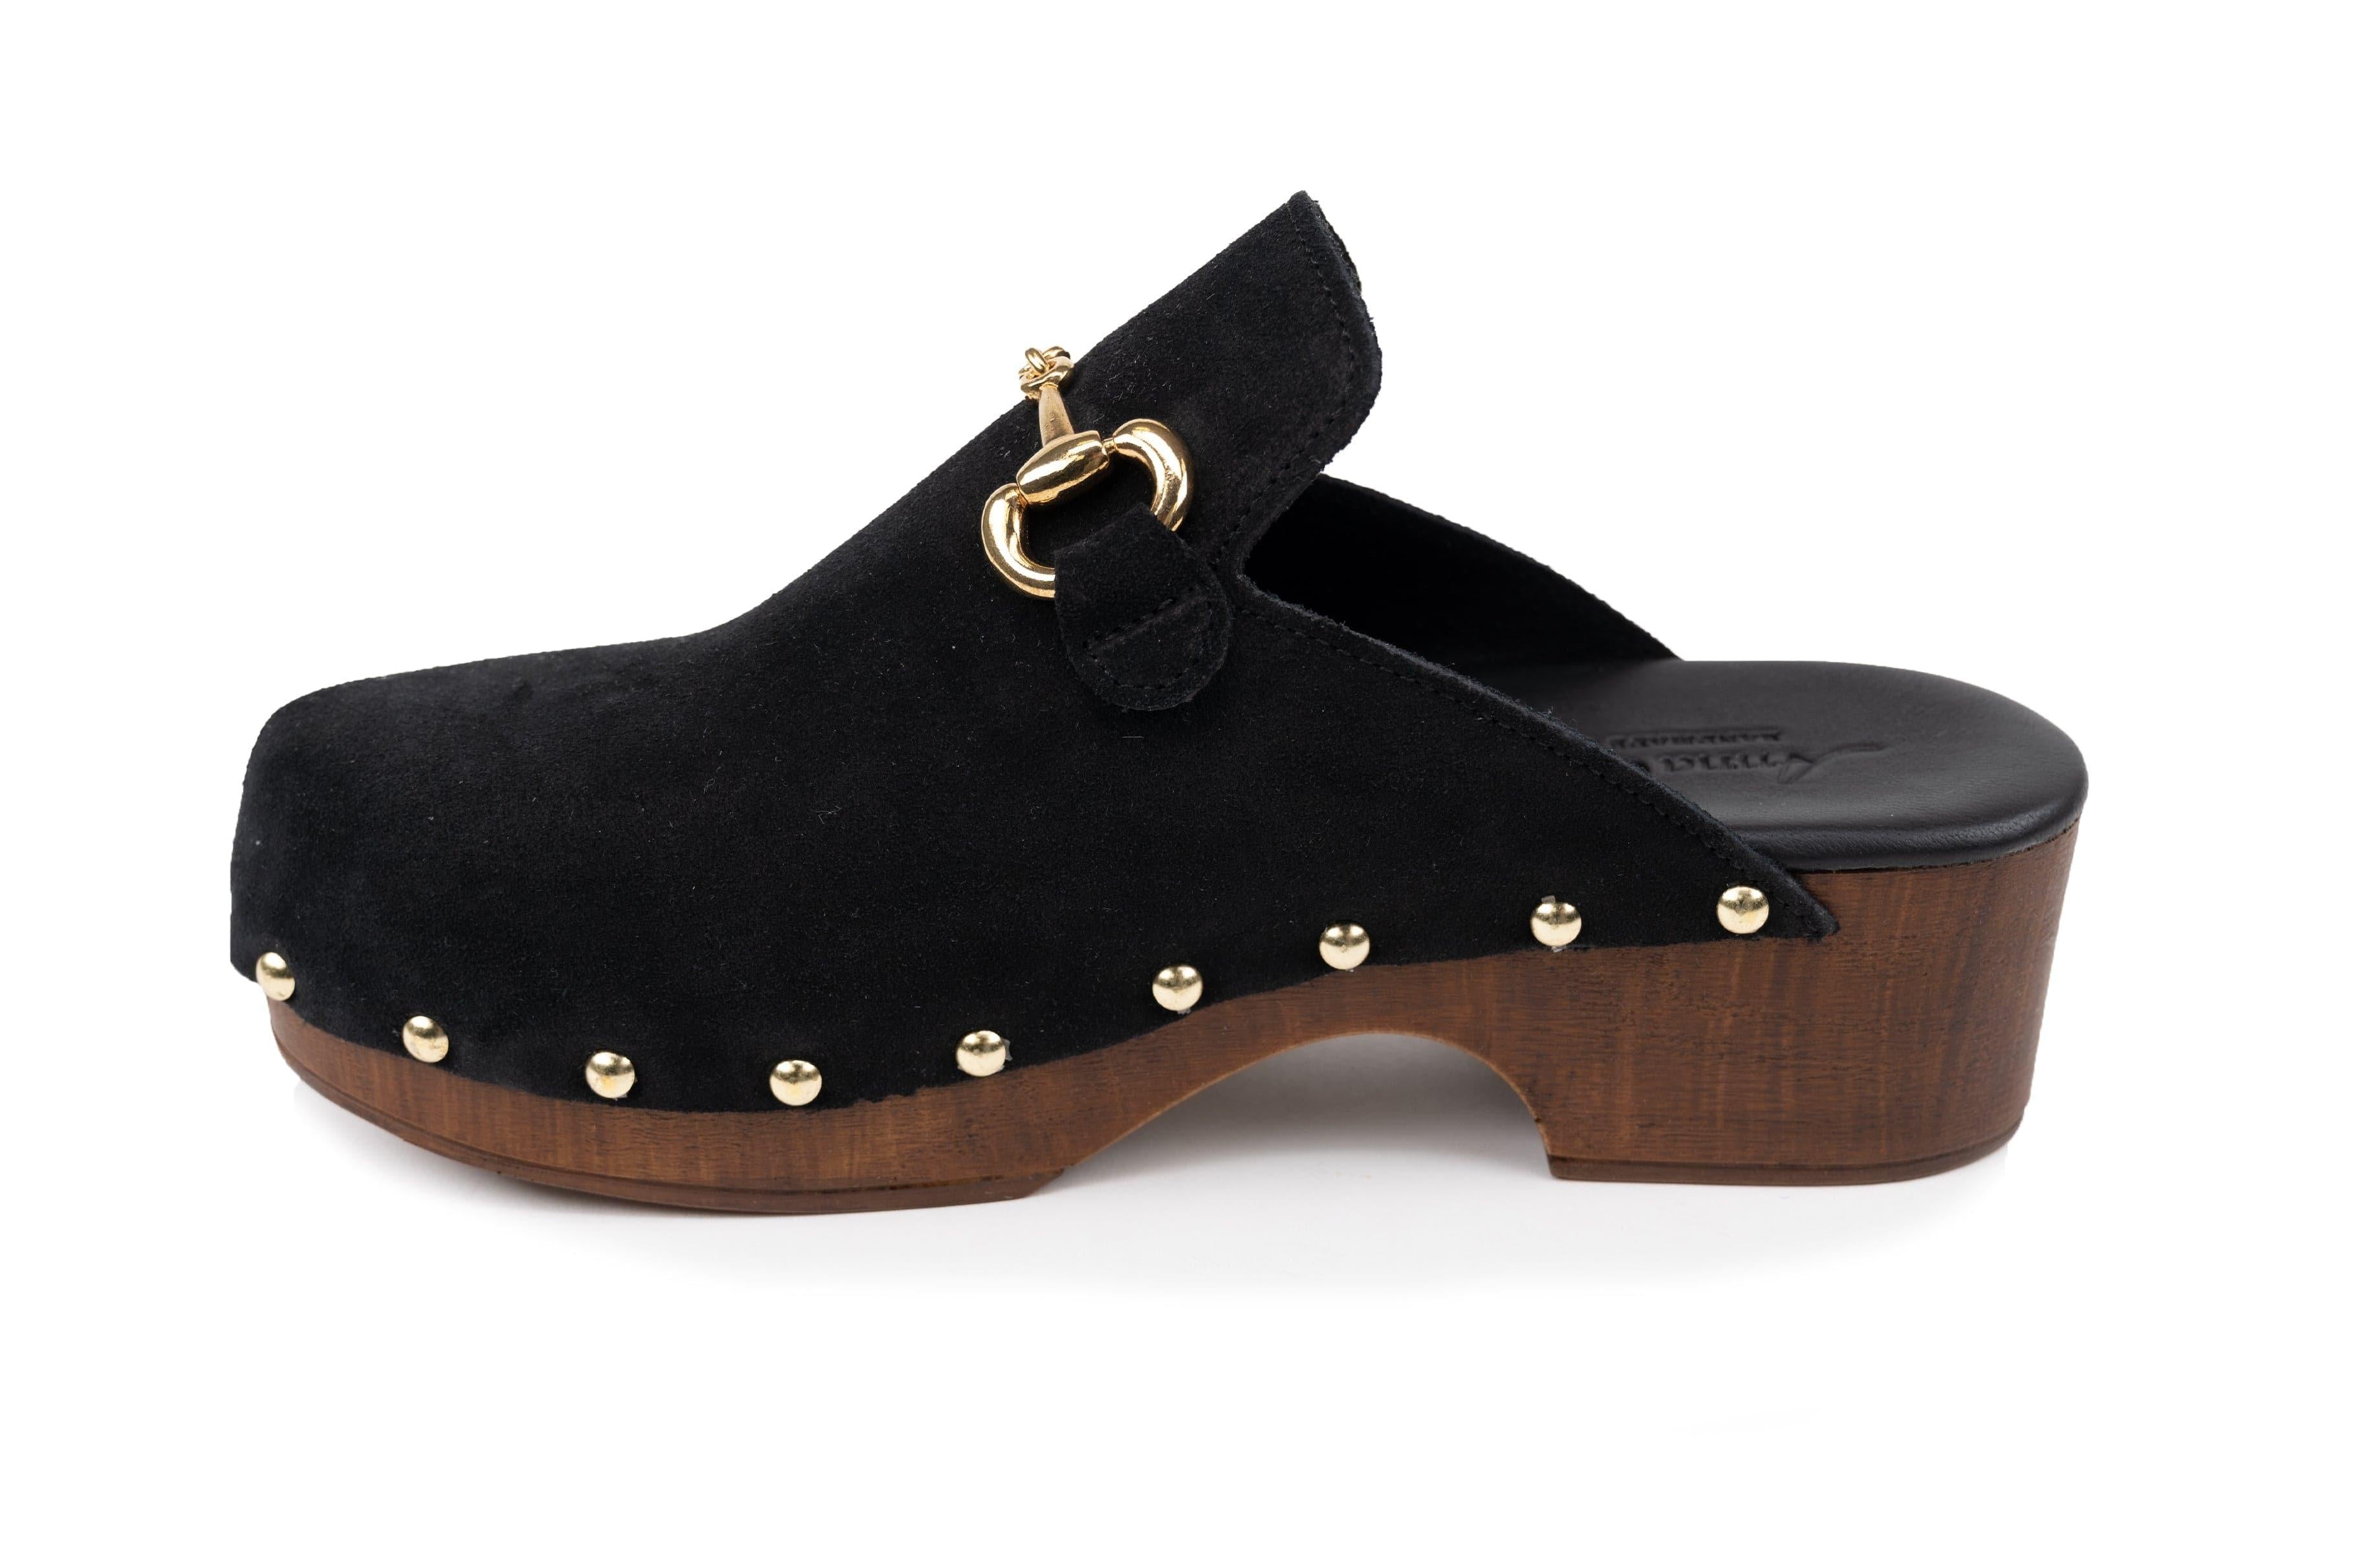 Gianna - Italian Leather Clogs with Chain - Italian Shoemakers